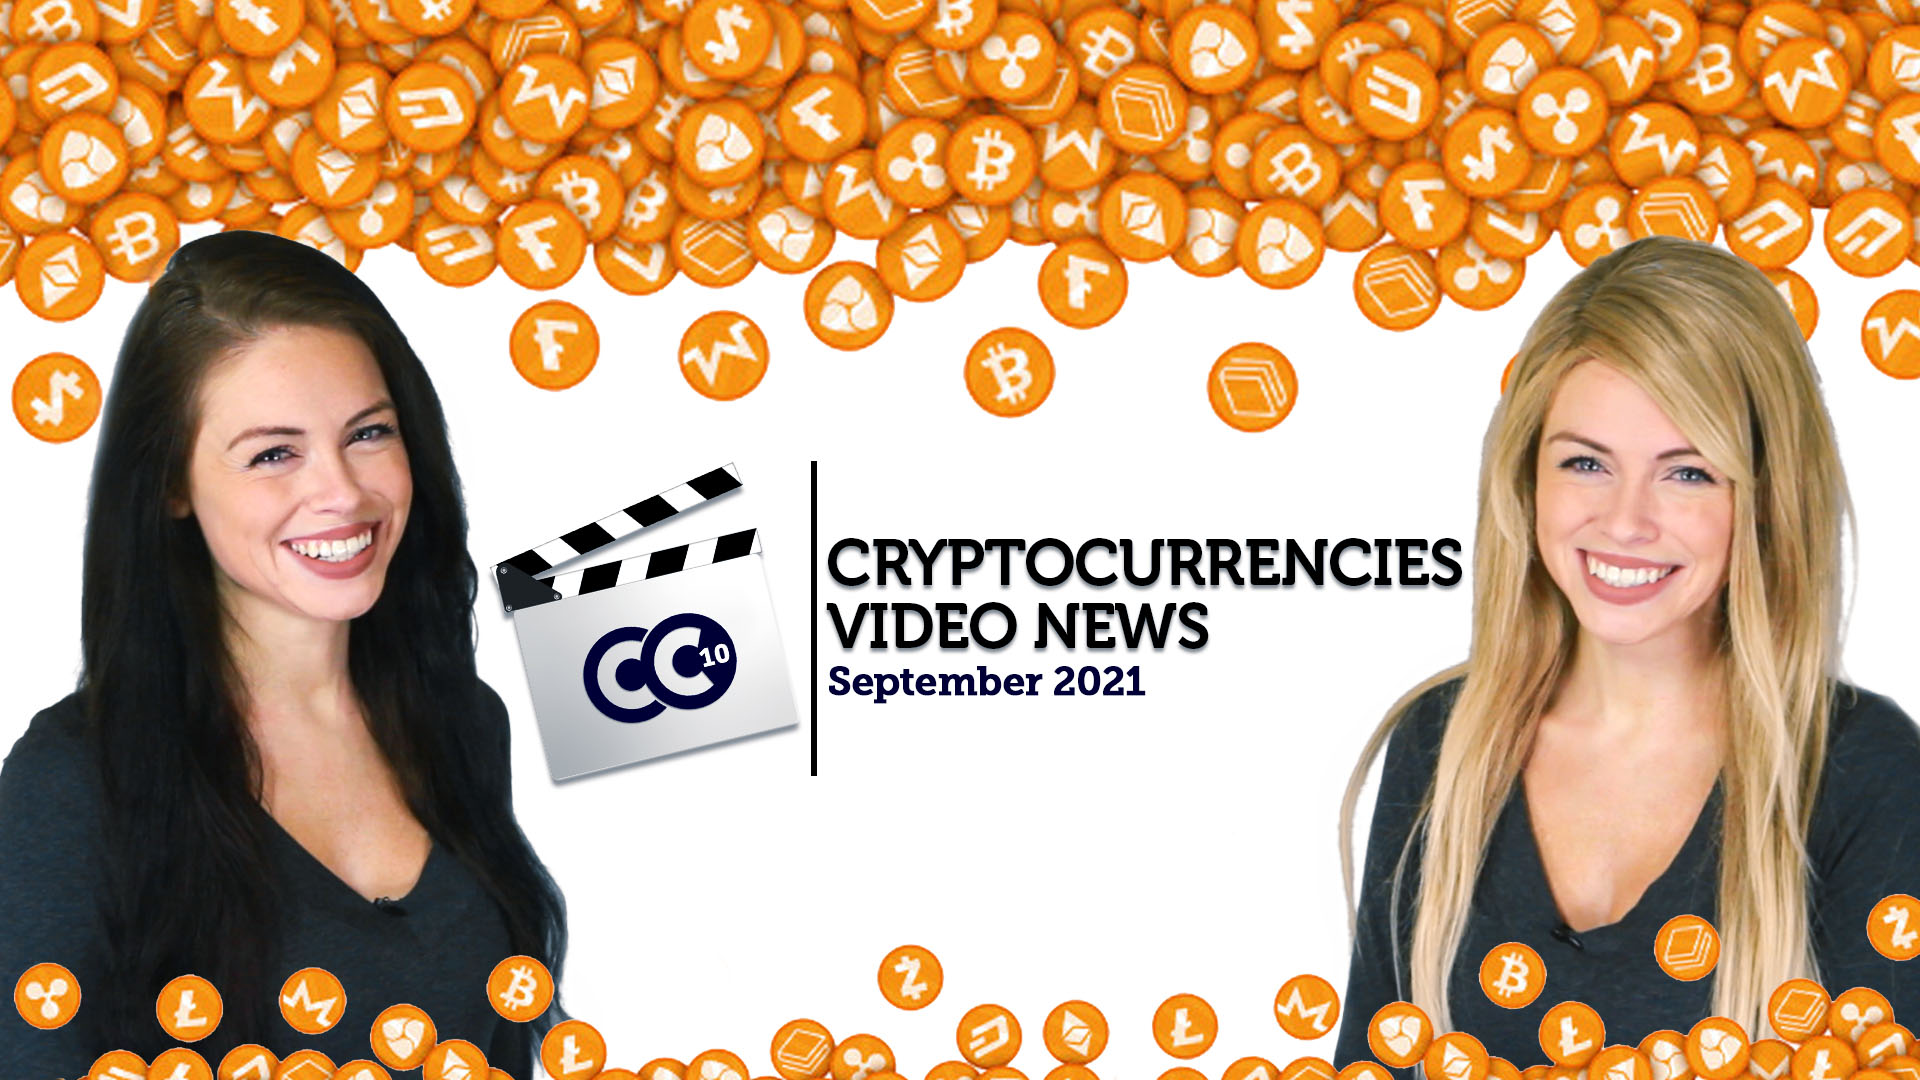 Cryptocurrencies Video News - September 2021